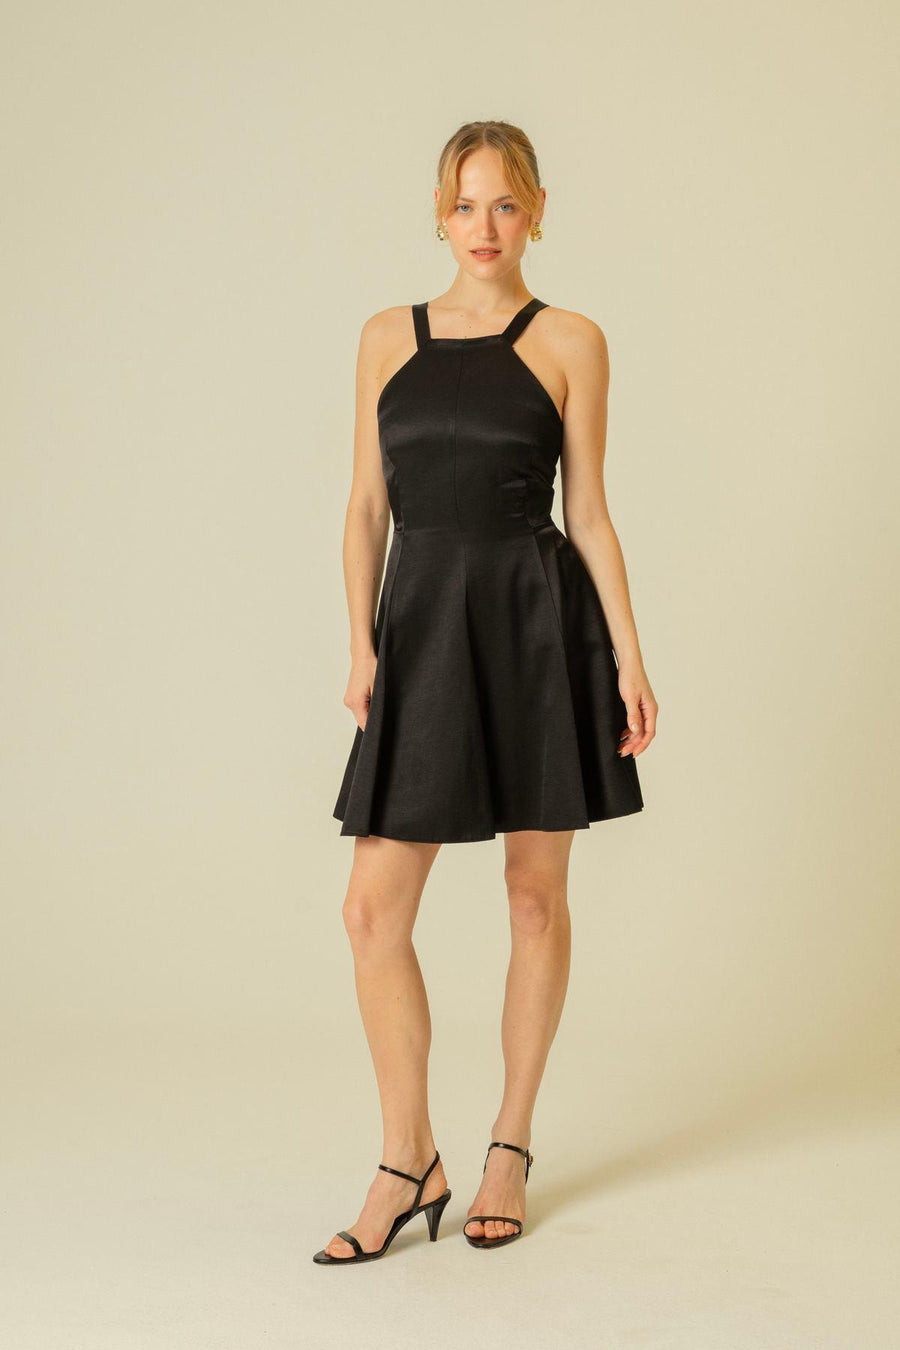 RUE Les Createurs Black Short Dress with Thin Straps & Pockets - Porterist 3